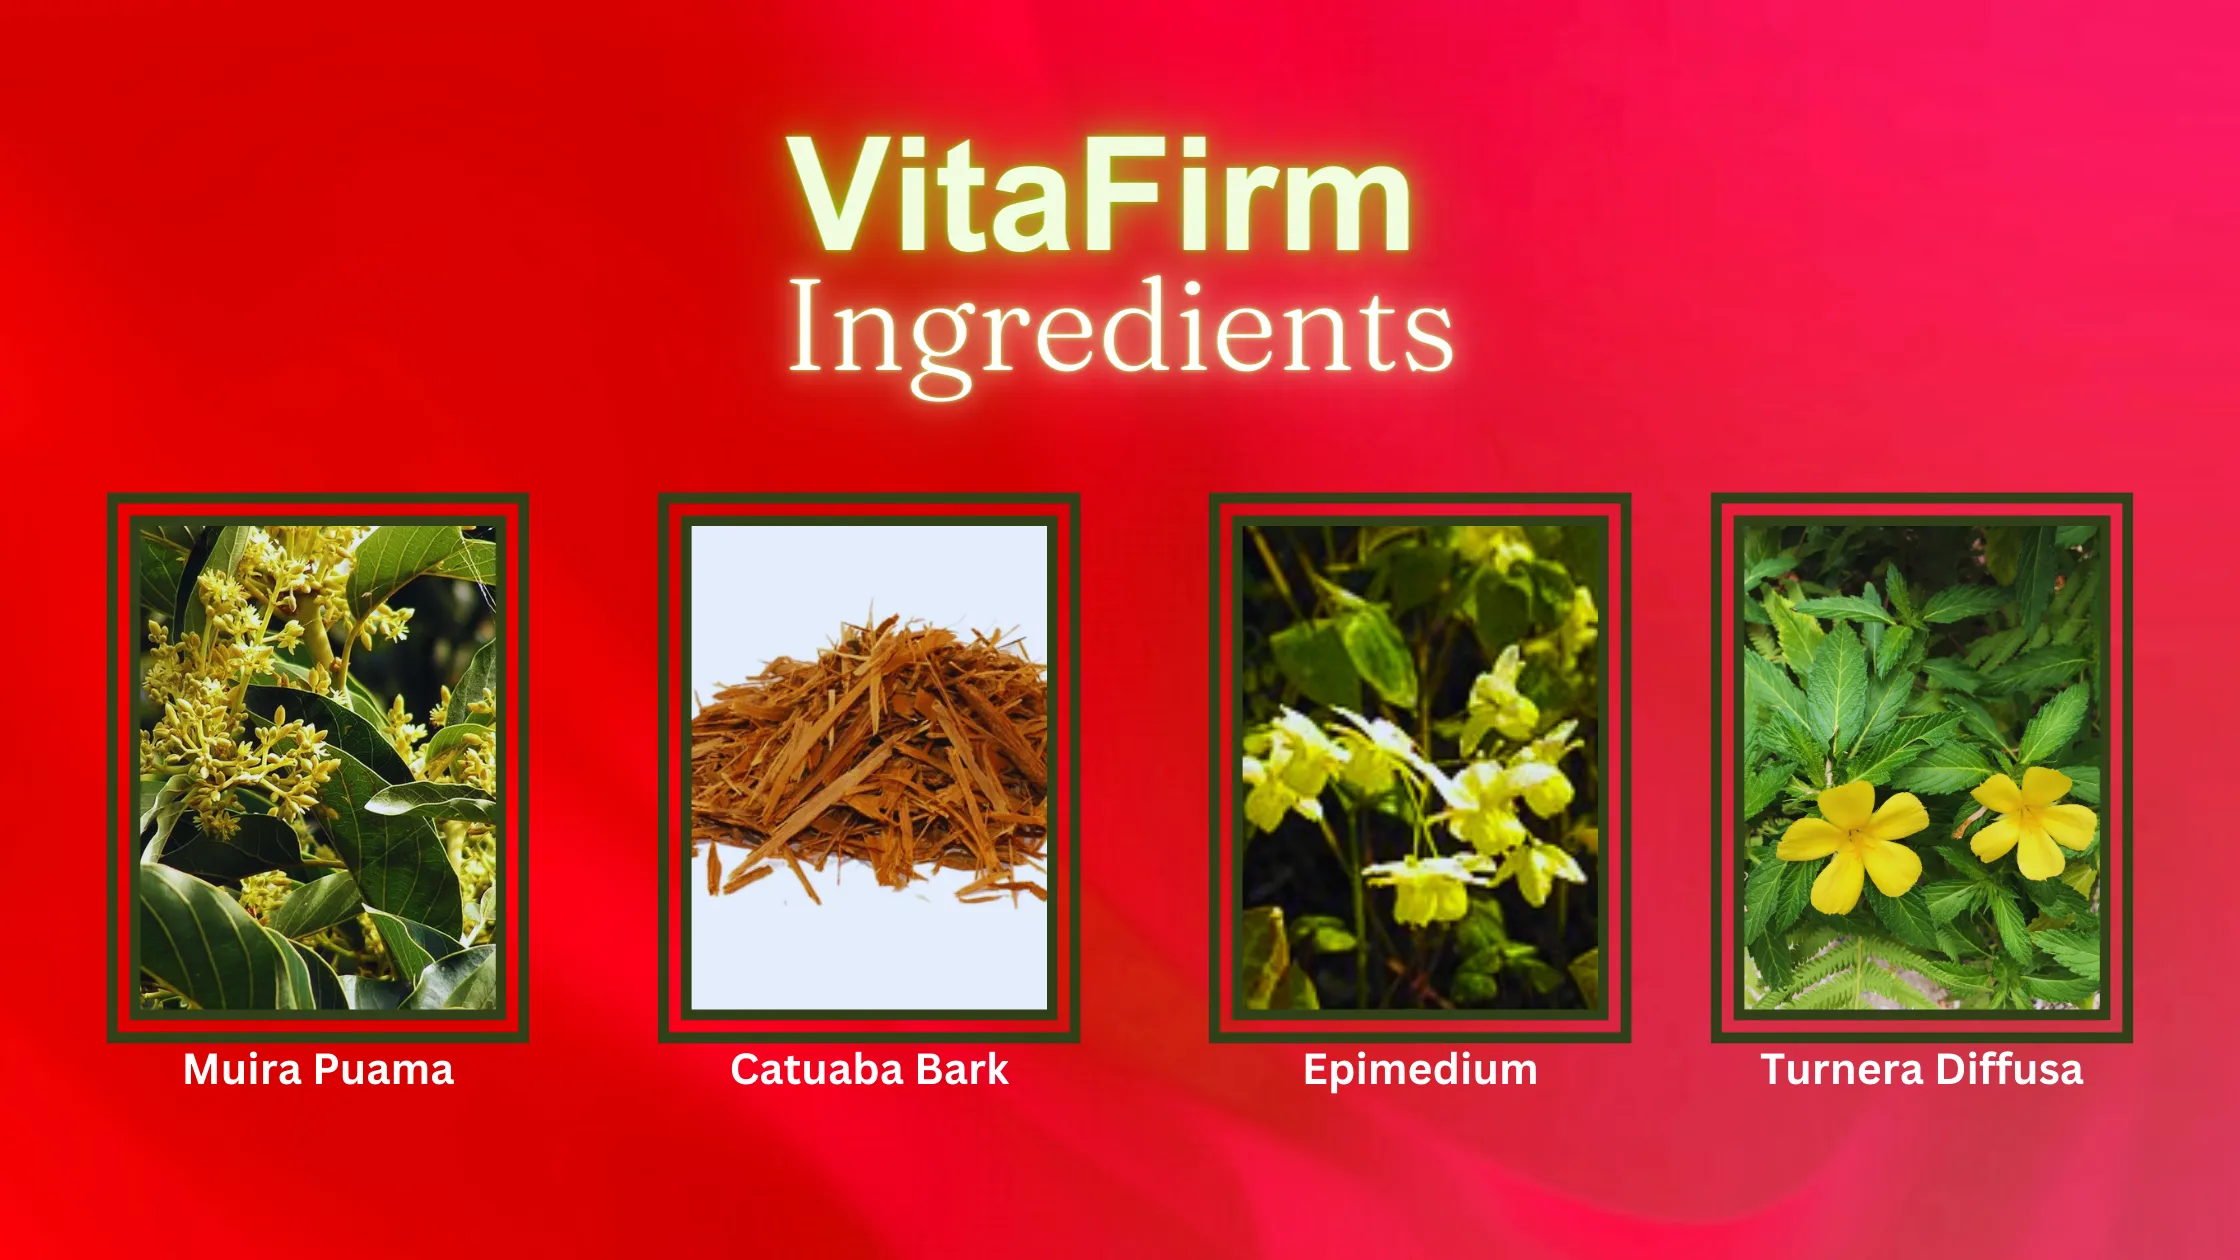 VitaFirm Ingredients